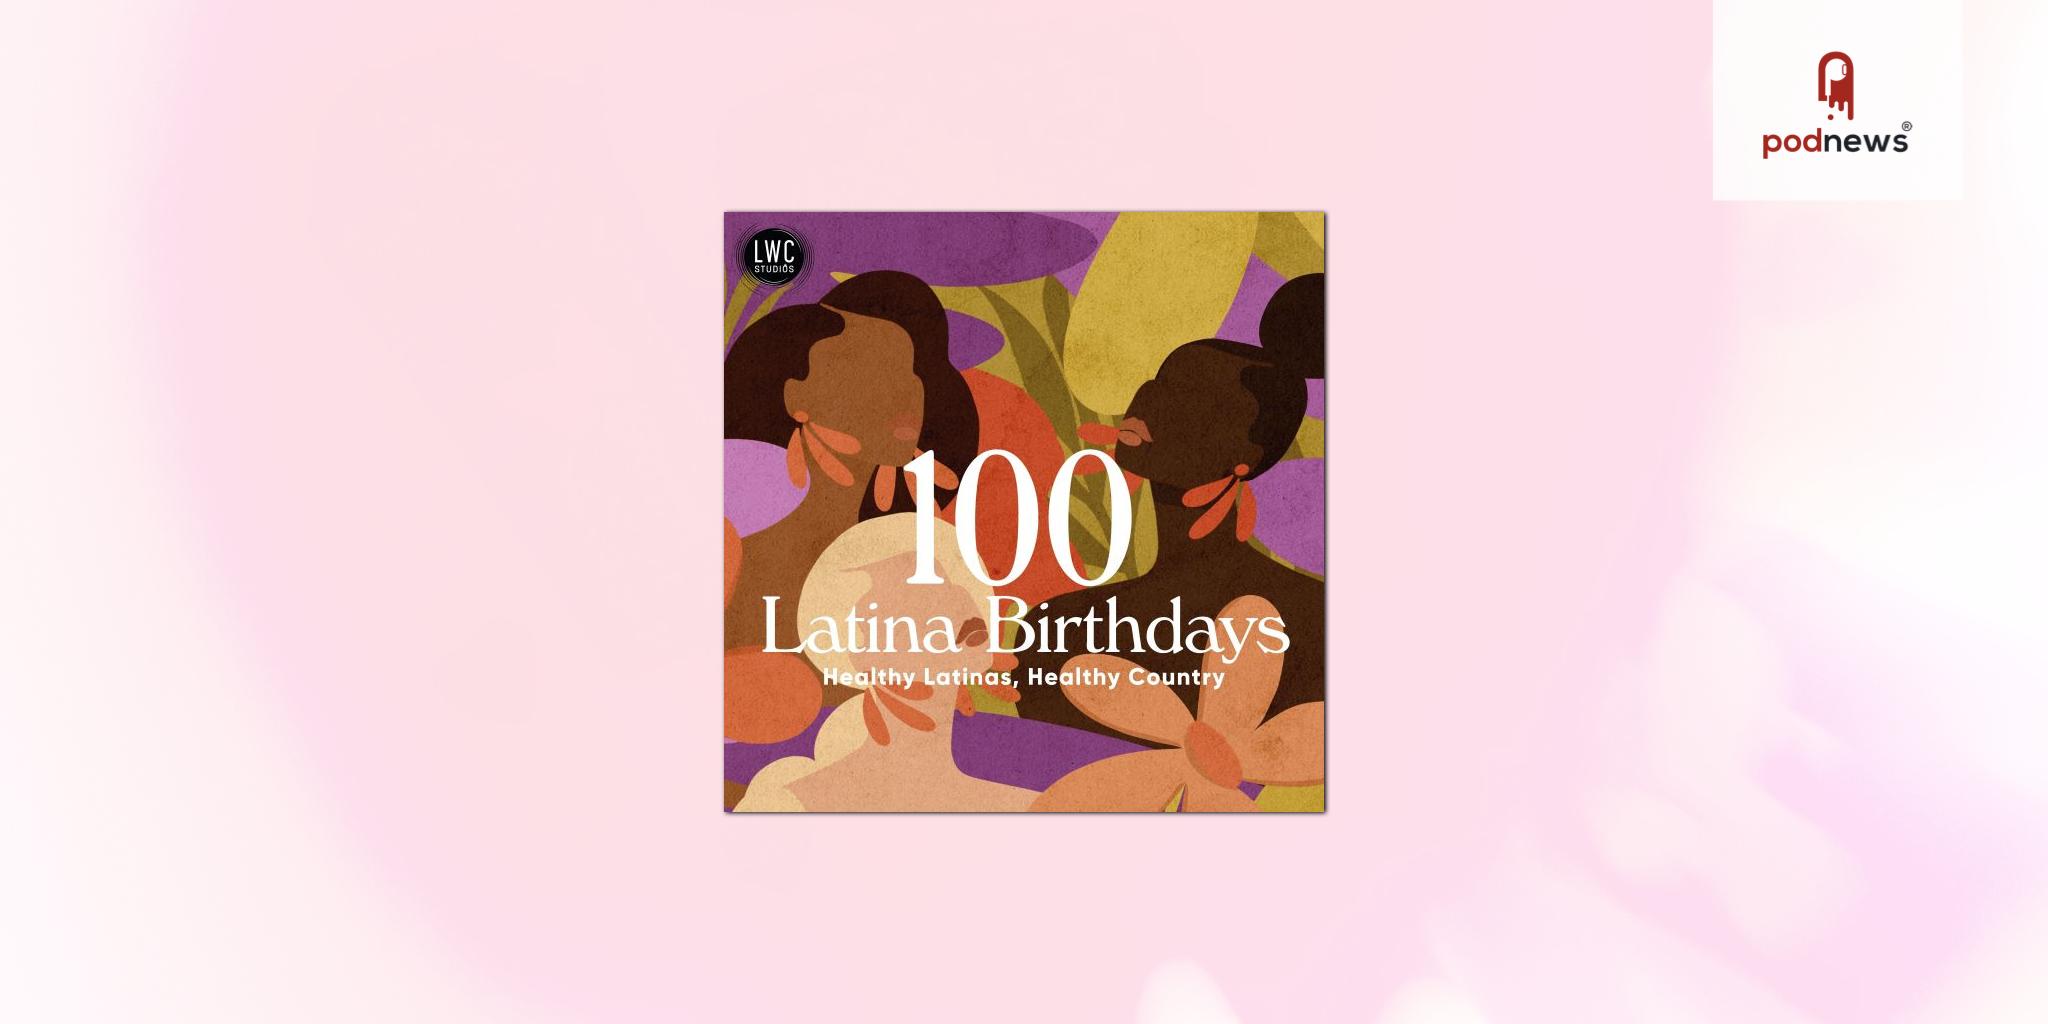 LWC Studios Launches 100 Latina Birthdays